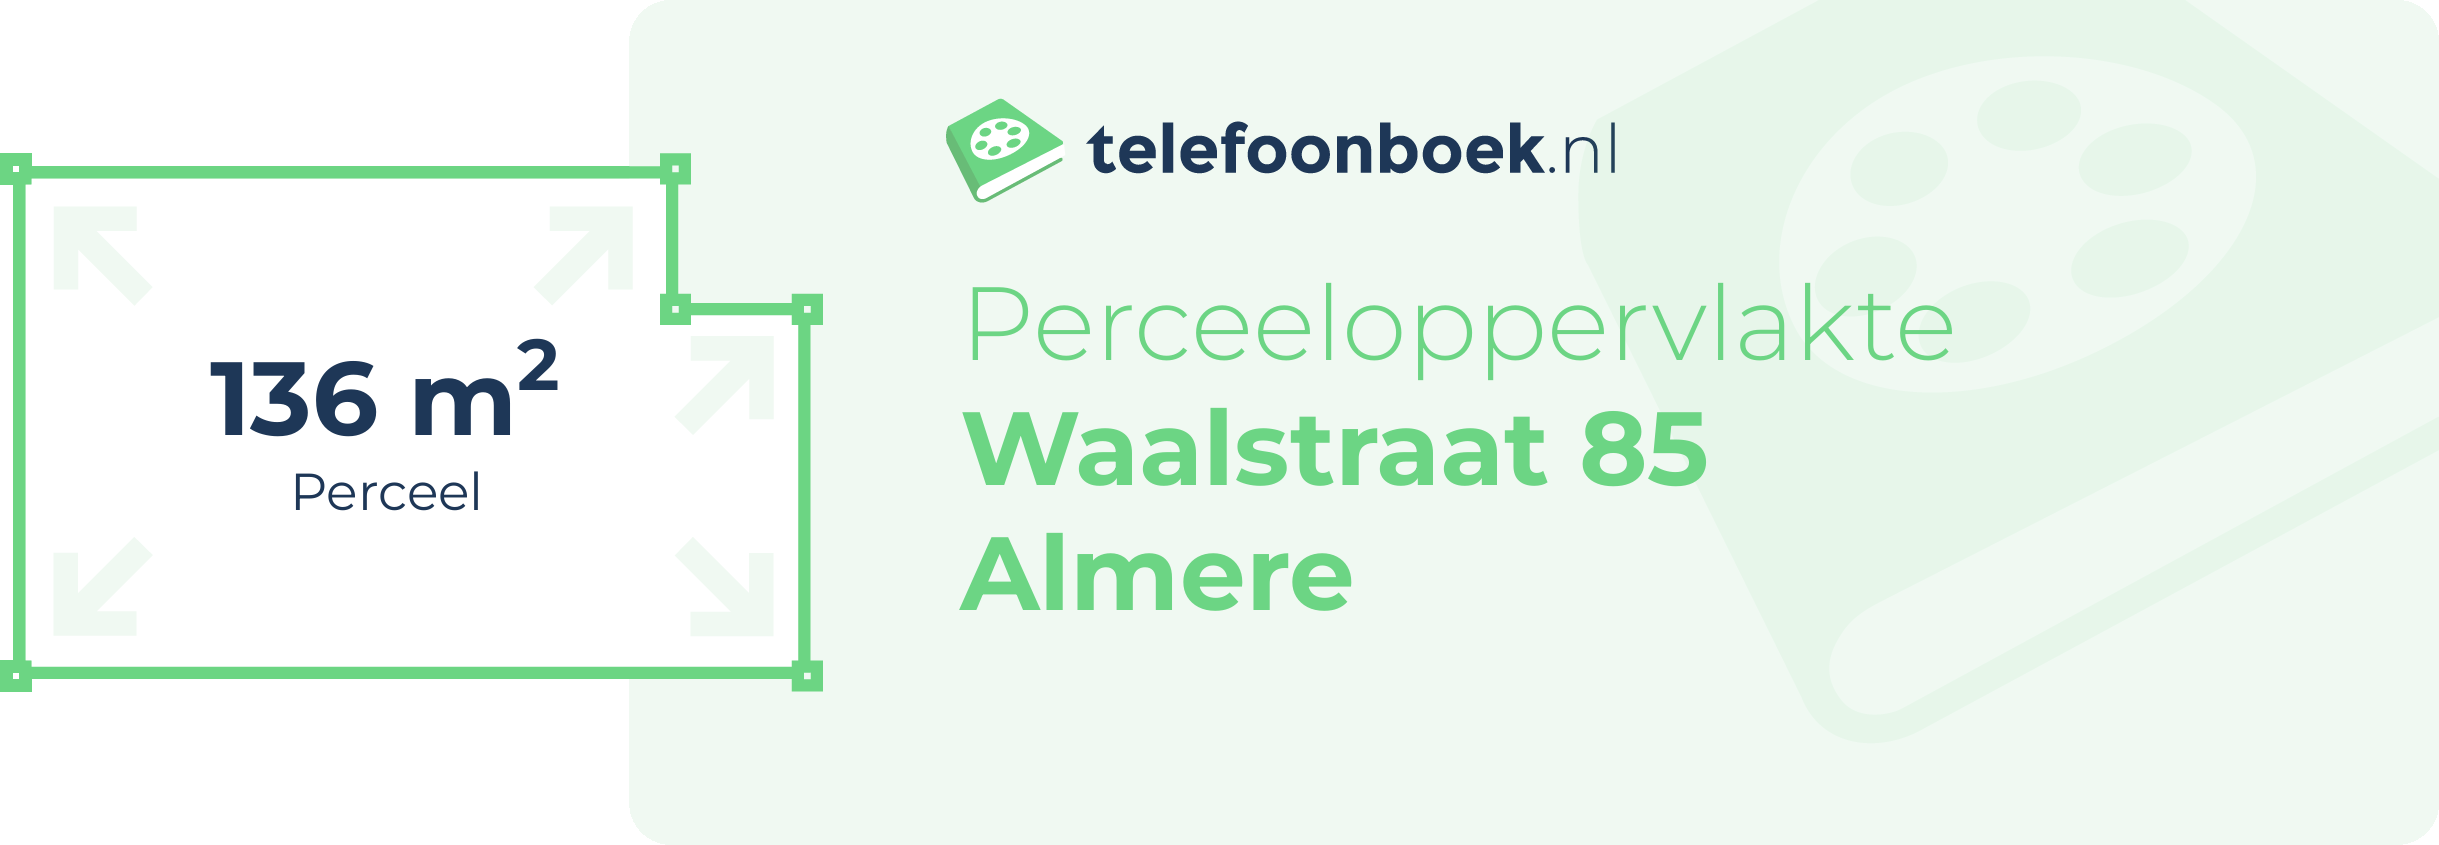 Perceeloppervlakte Waalstraat 85 Almere